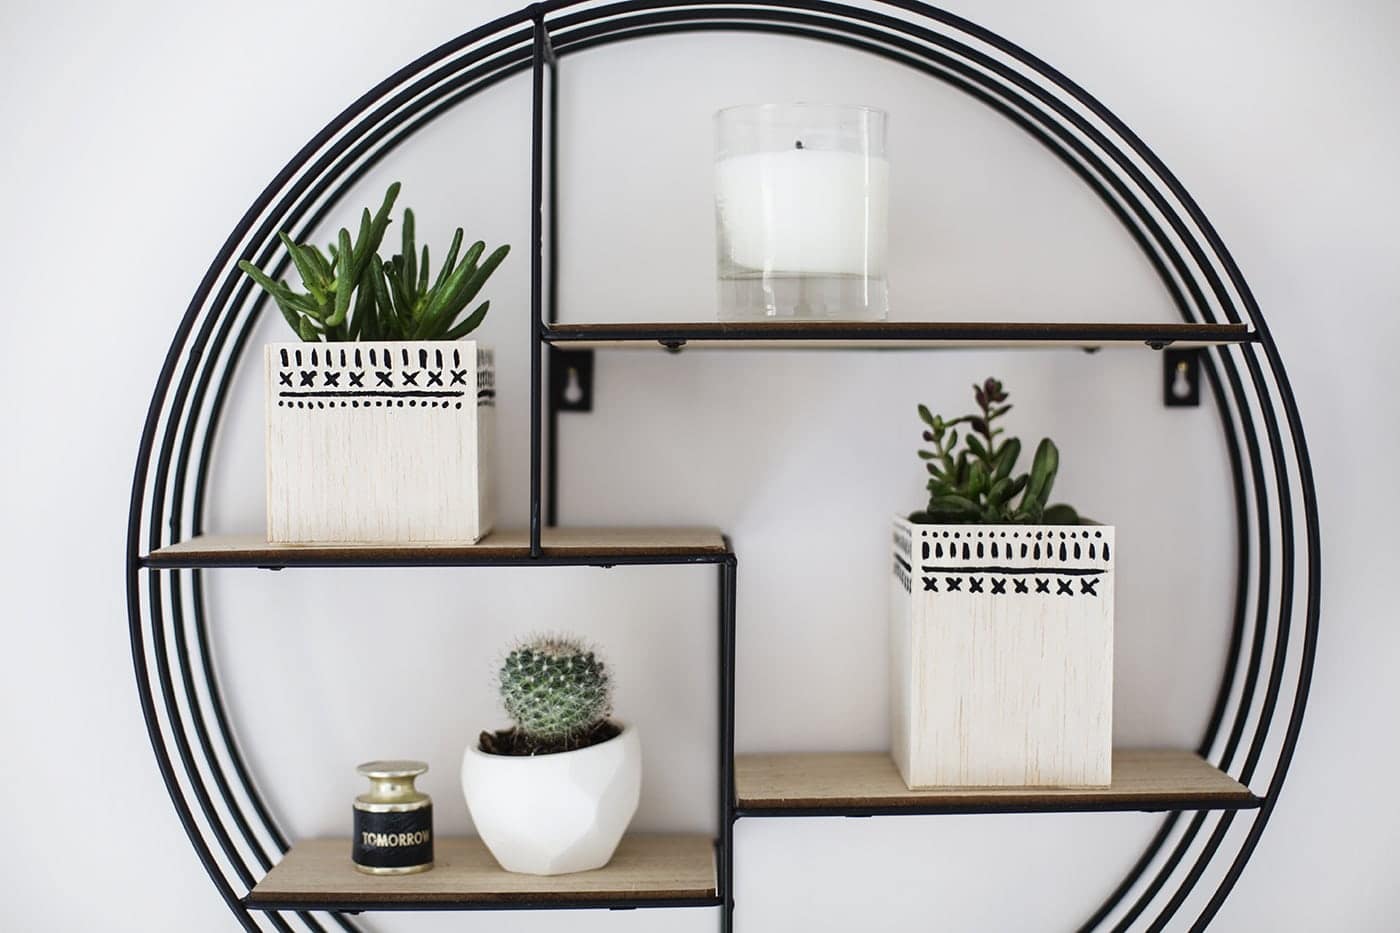 DIY decorative wood planters tutorial | easy home craft ideas copy